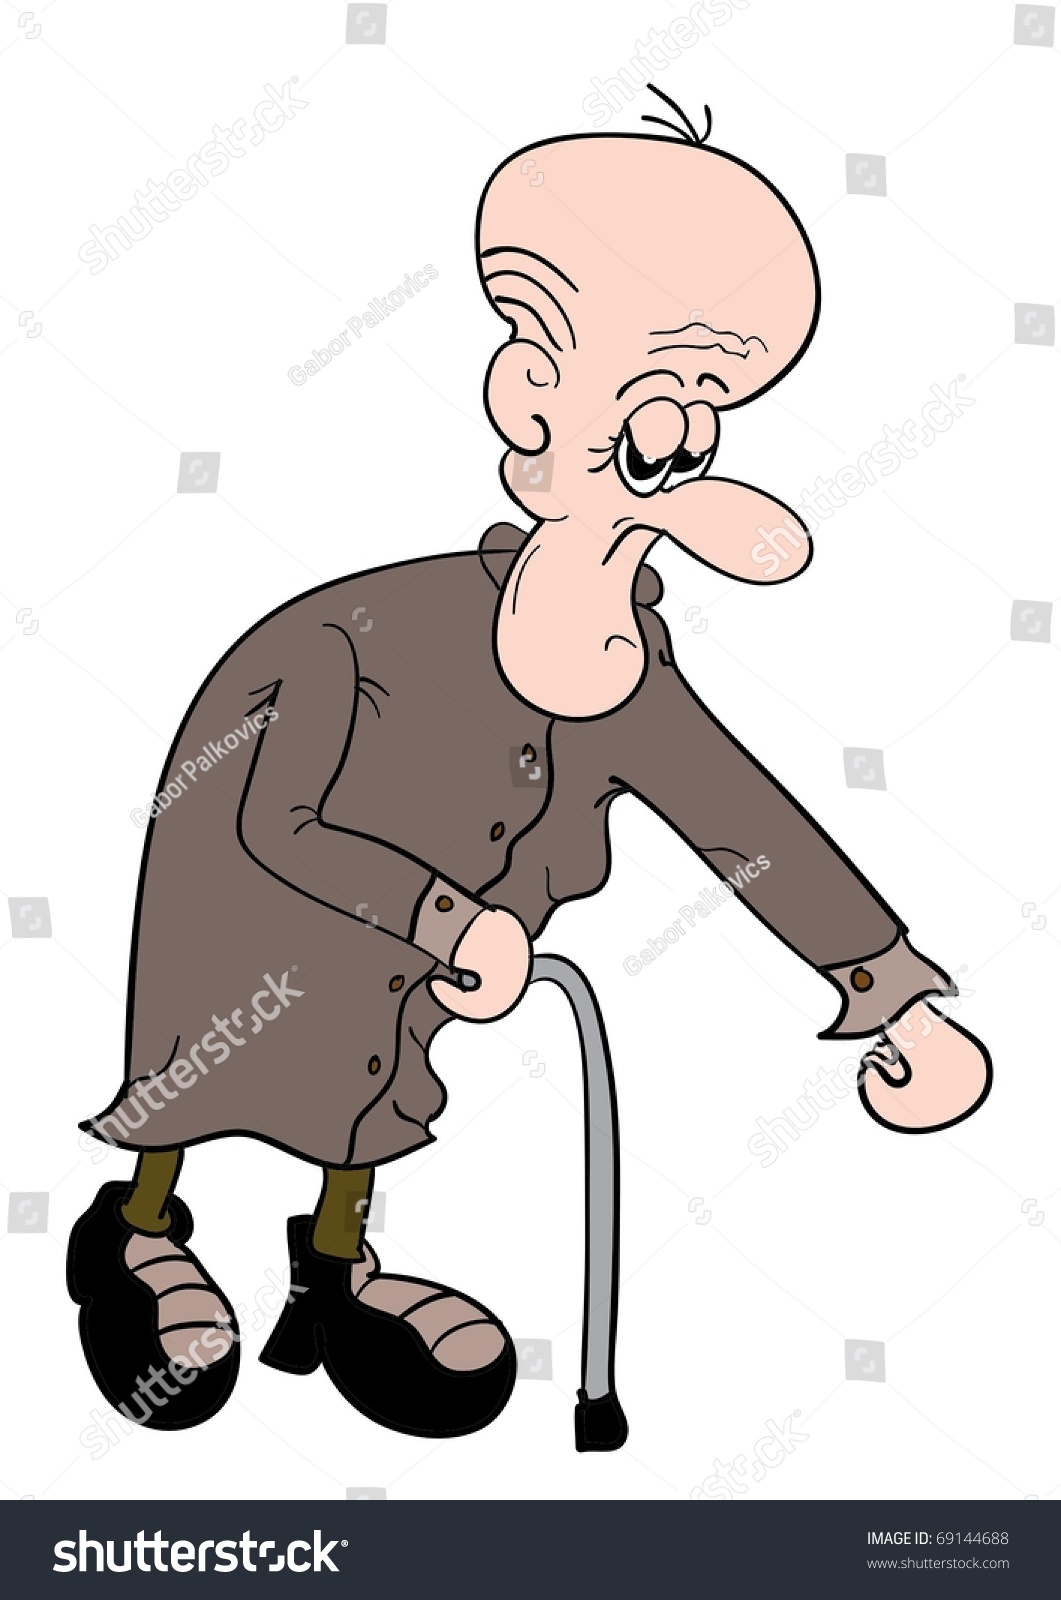 Comic Isolated Old Man Illustration - 69144688 : Shutterstock